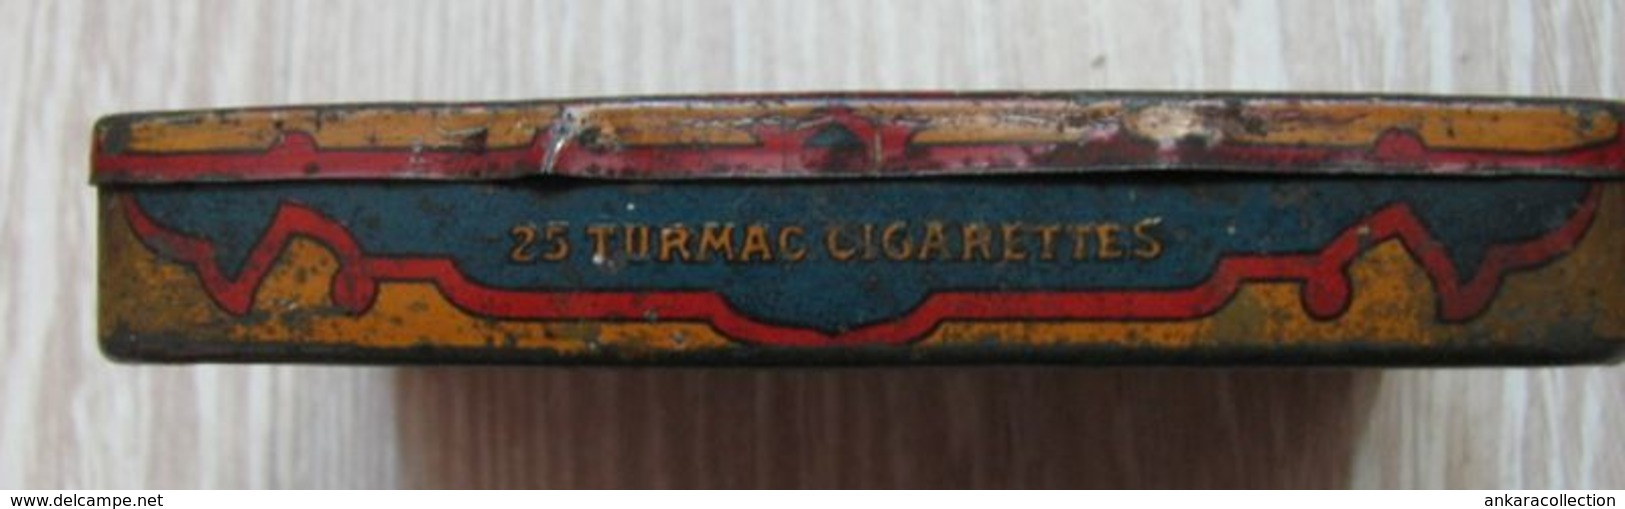 AC - TURMAC ORANGE CIGARETTE TOBACCO EMPTY VINTAGE TIN BOX - Boites à Tabac Vides